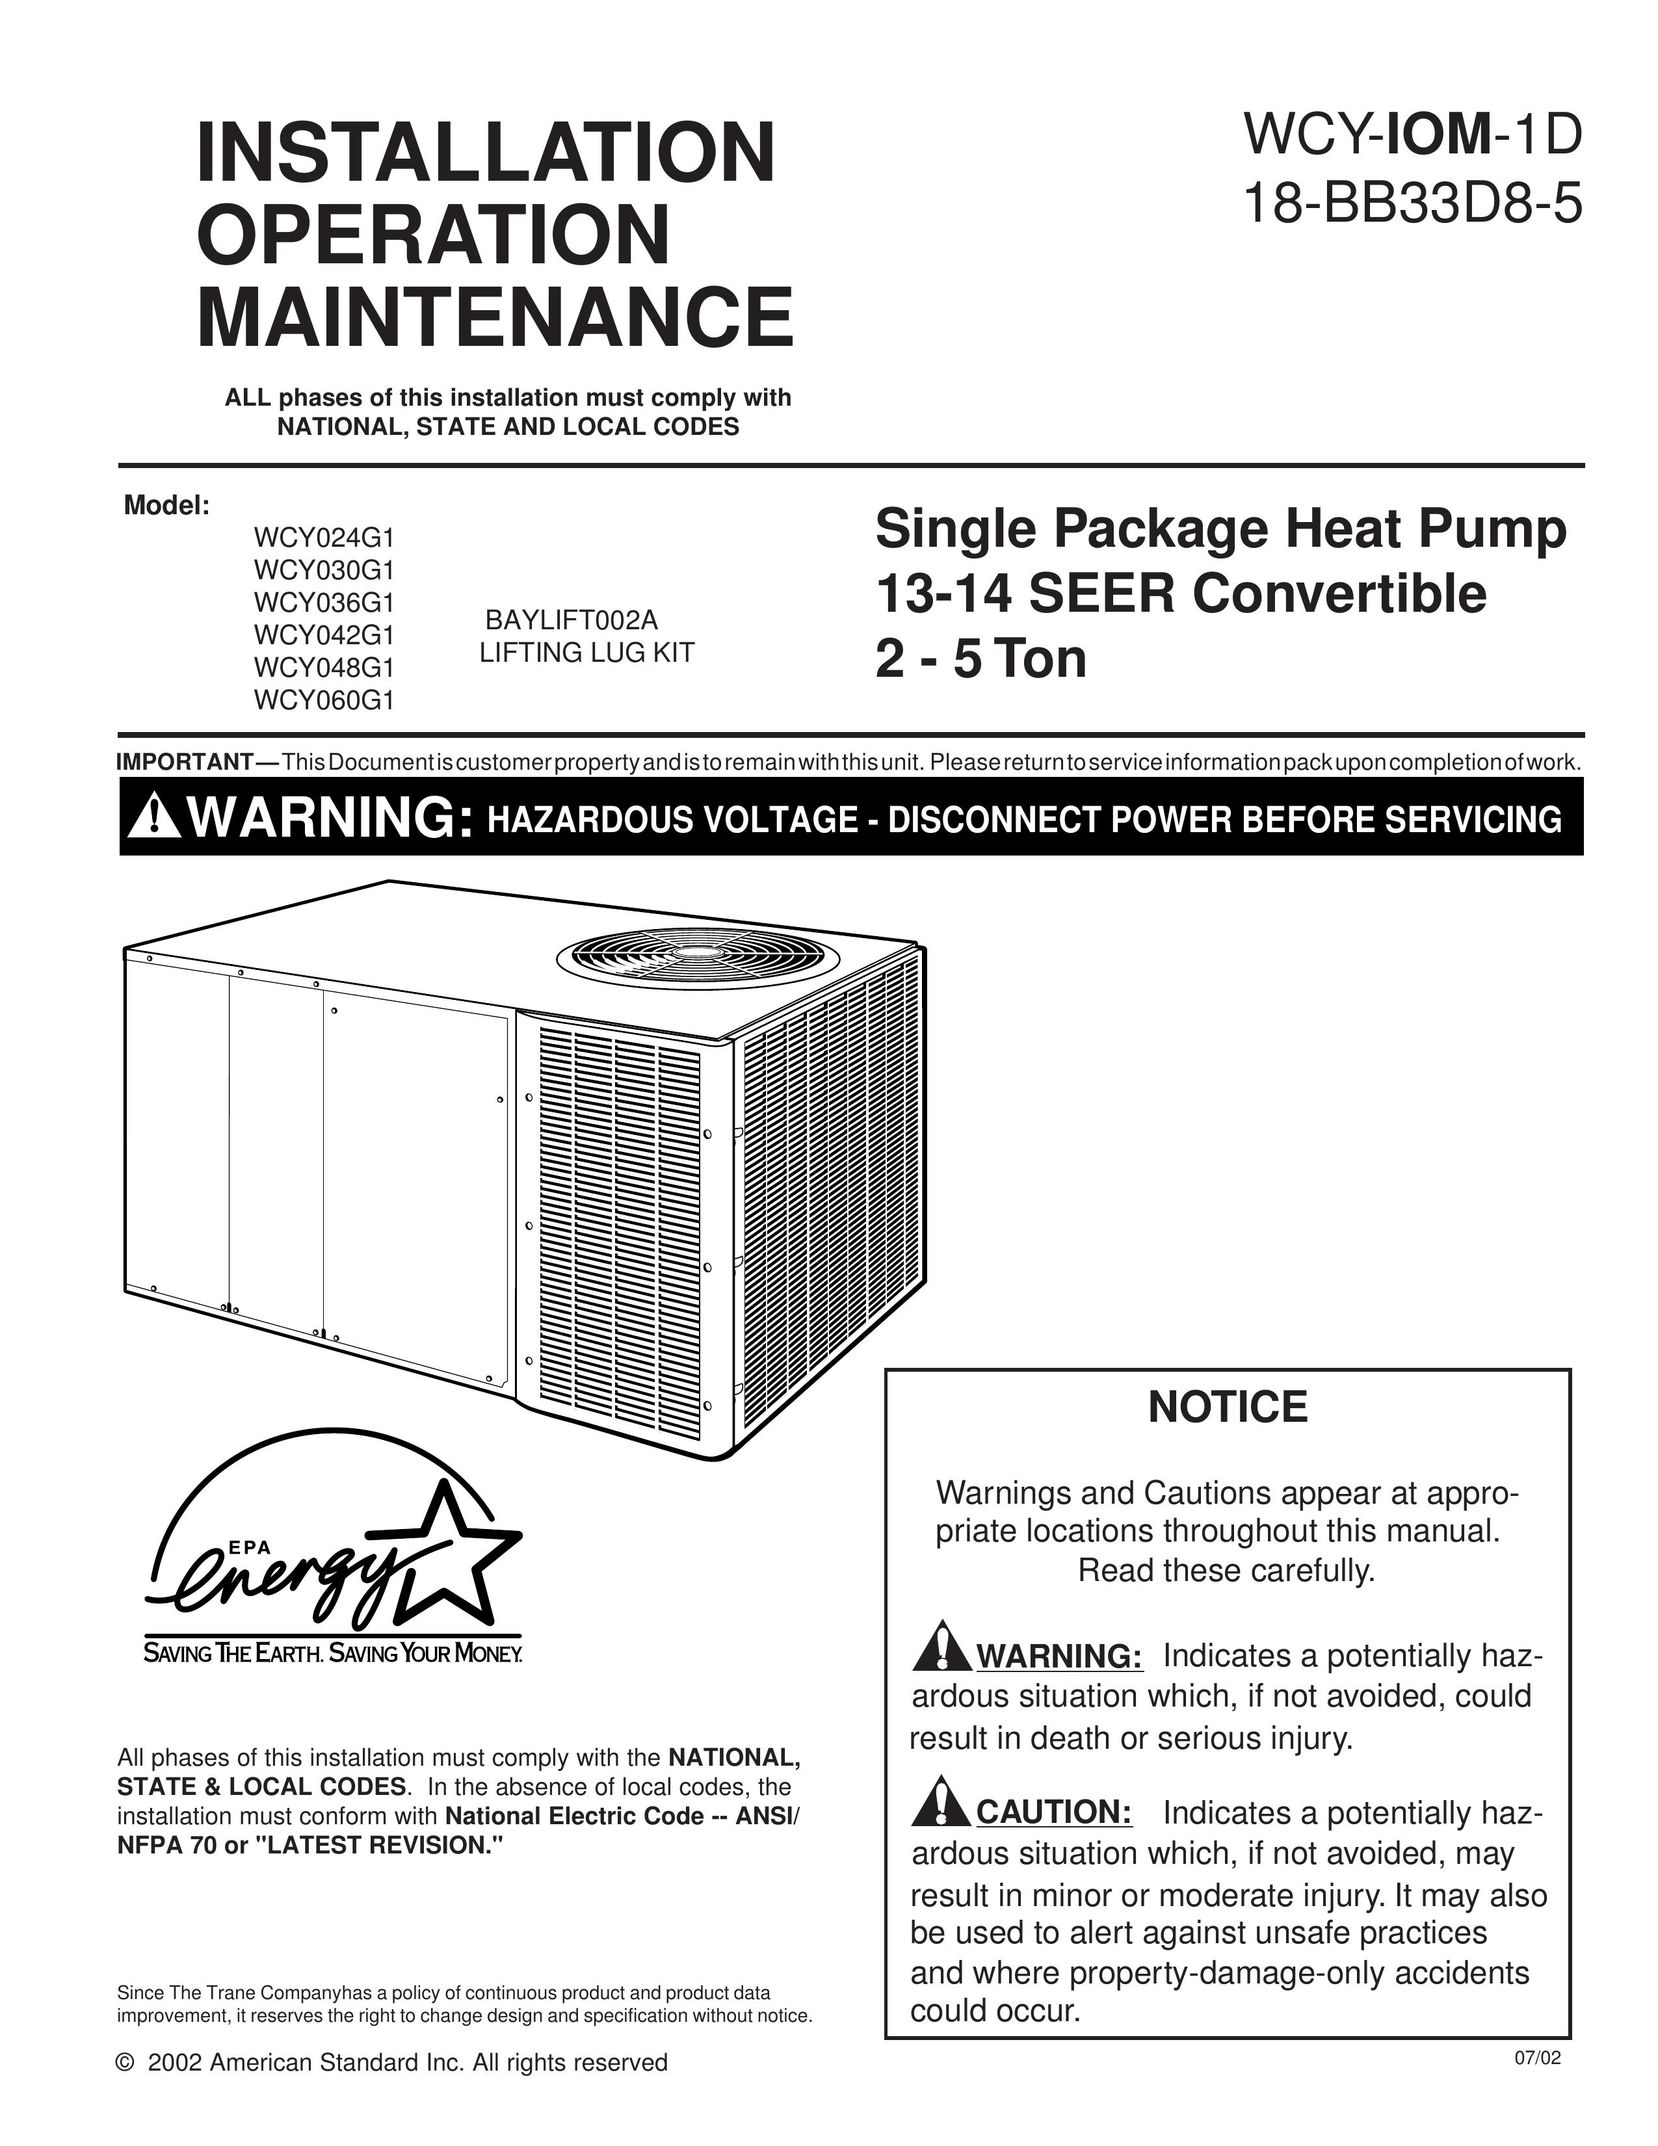 Trane WCY042G1 Heat Pump User Manual